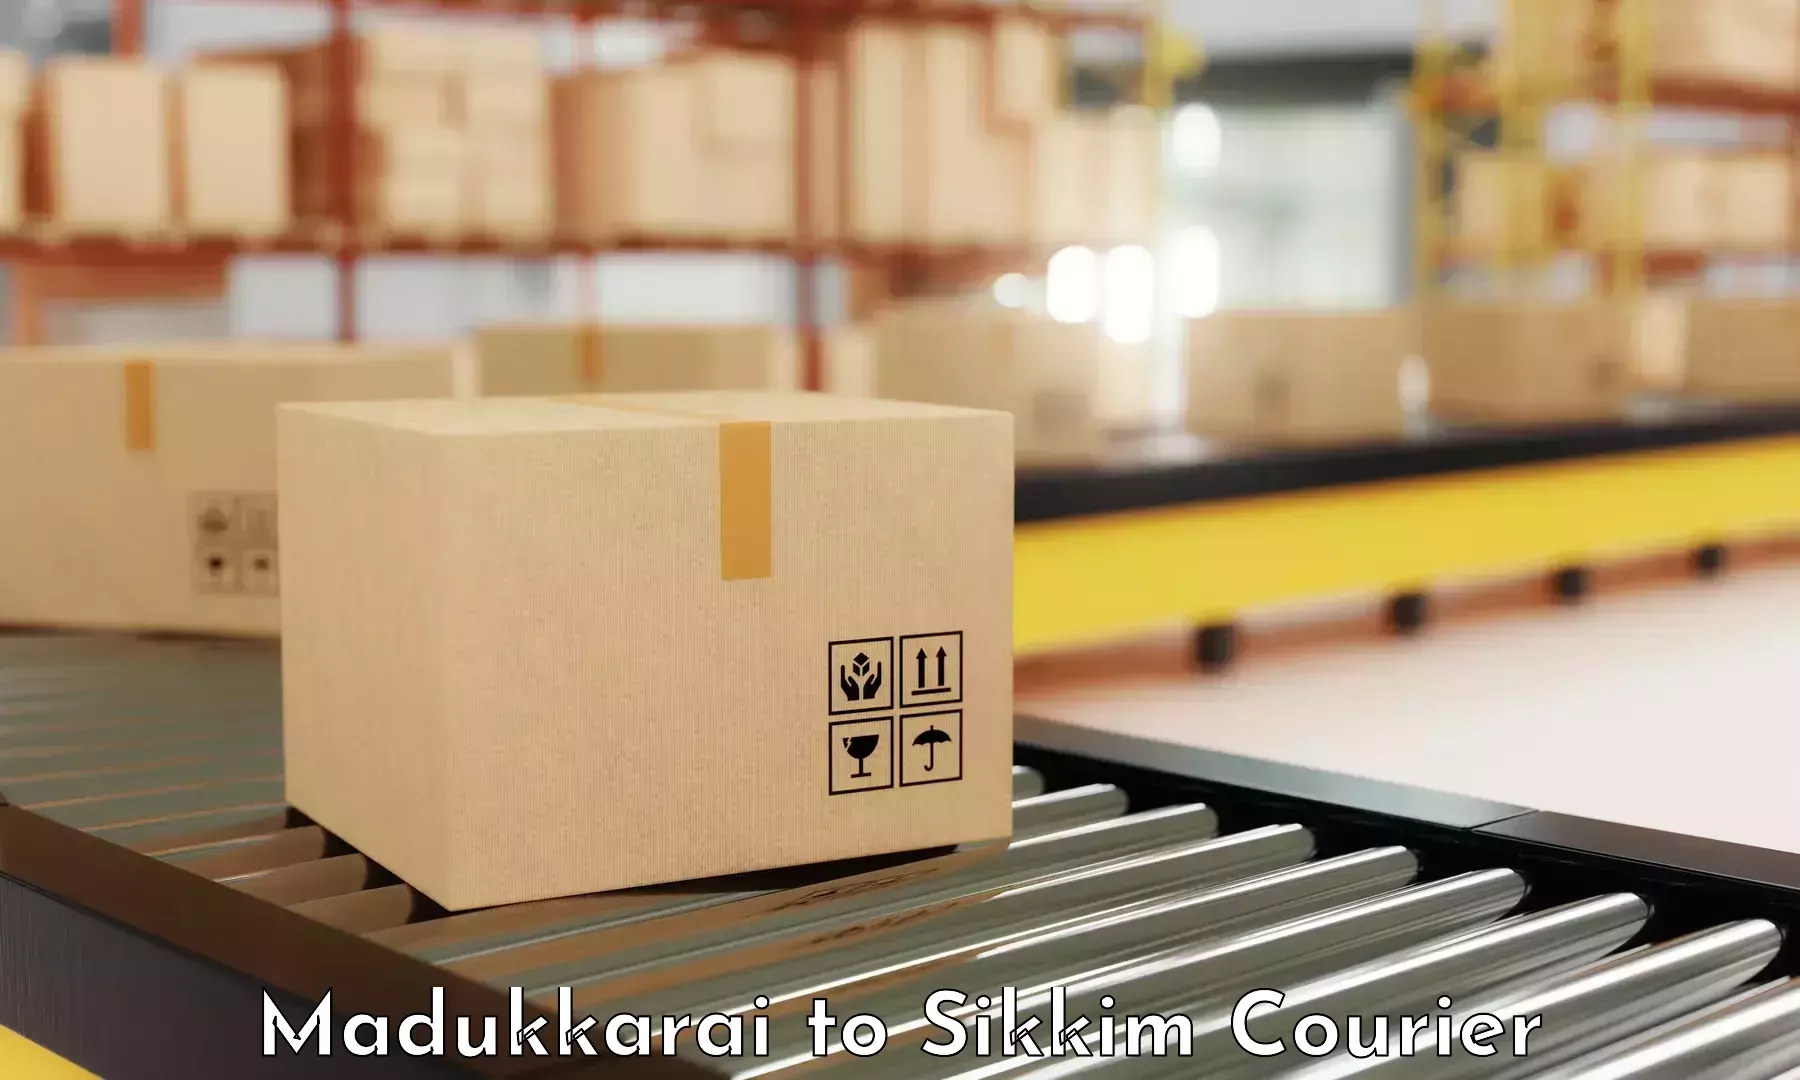 Full-service courier options Madukkarai to Pelling